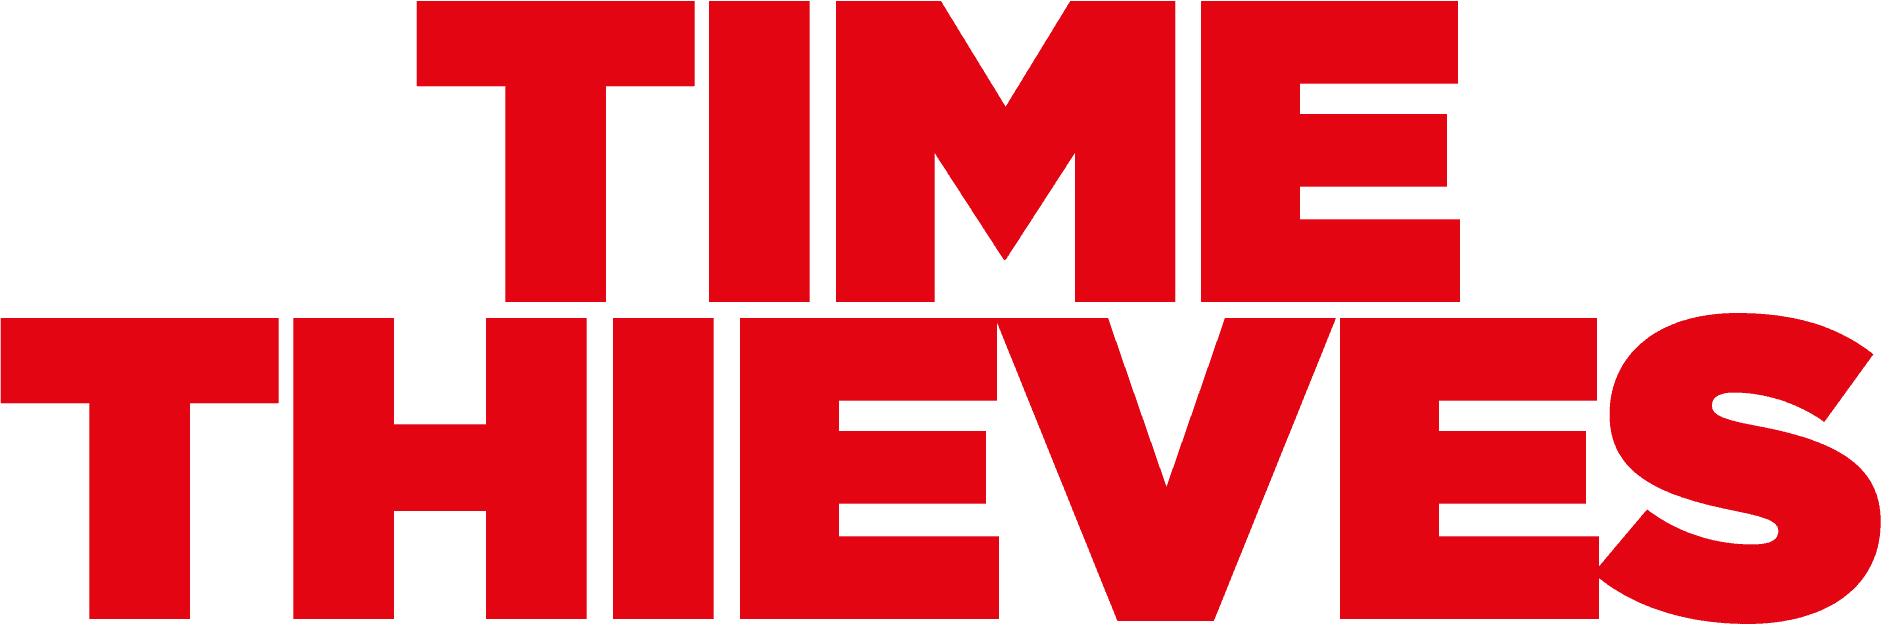 Time Thieves logo